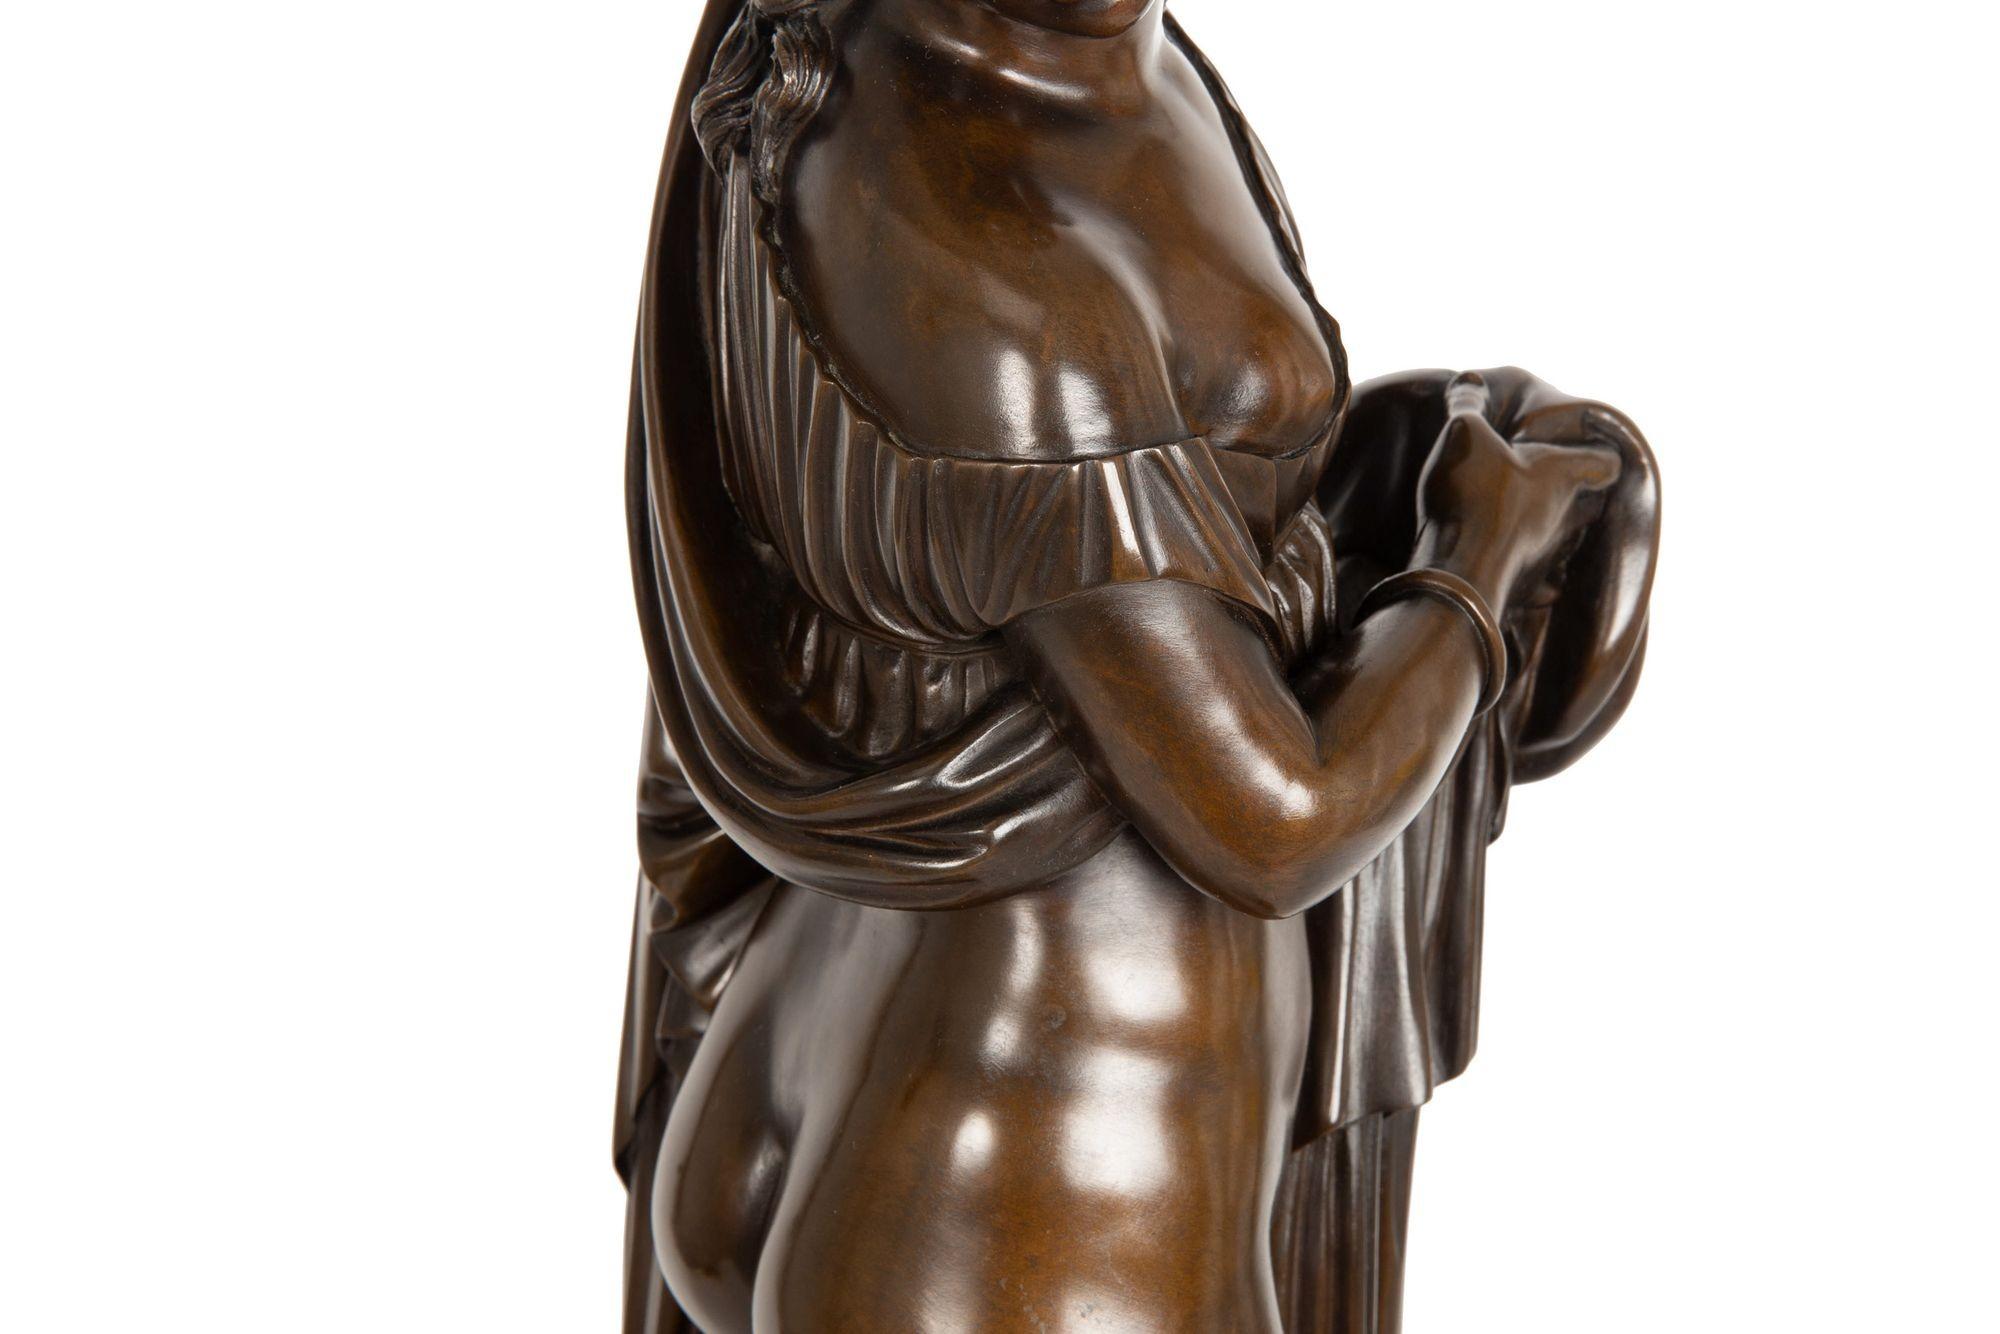 19th Century Grand Tour Bronze Sculpture “Callipygian Venus” of Antiquity For Sale 9